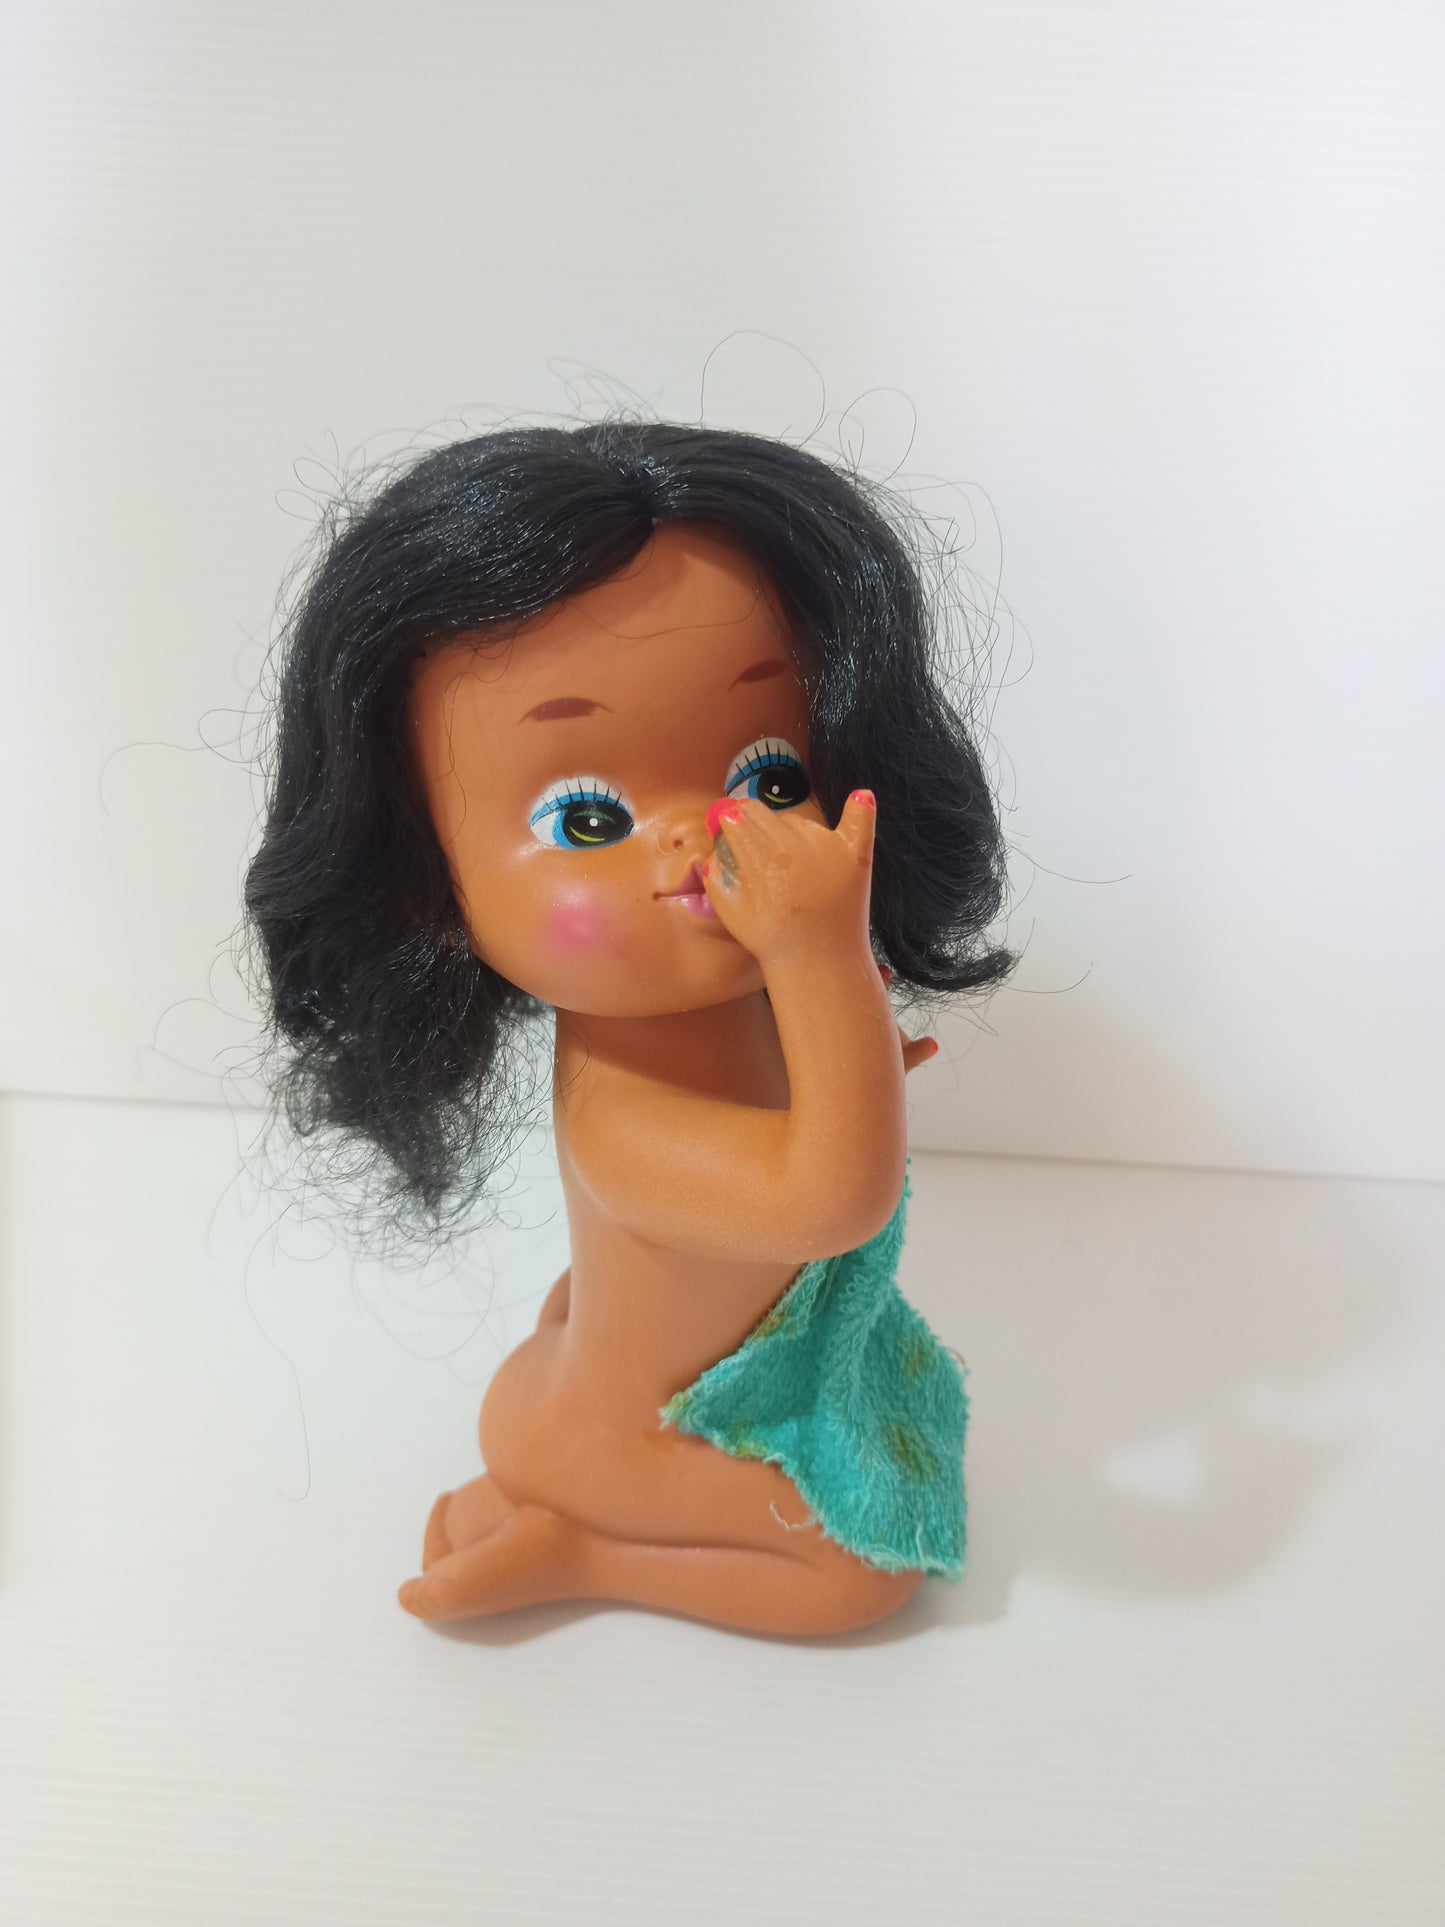 Hawaiian doll from the 60s-70s, made in Hong Kong